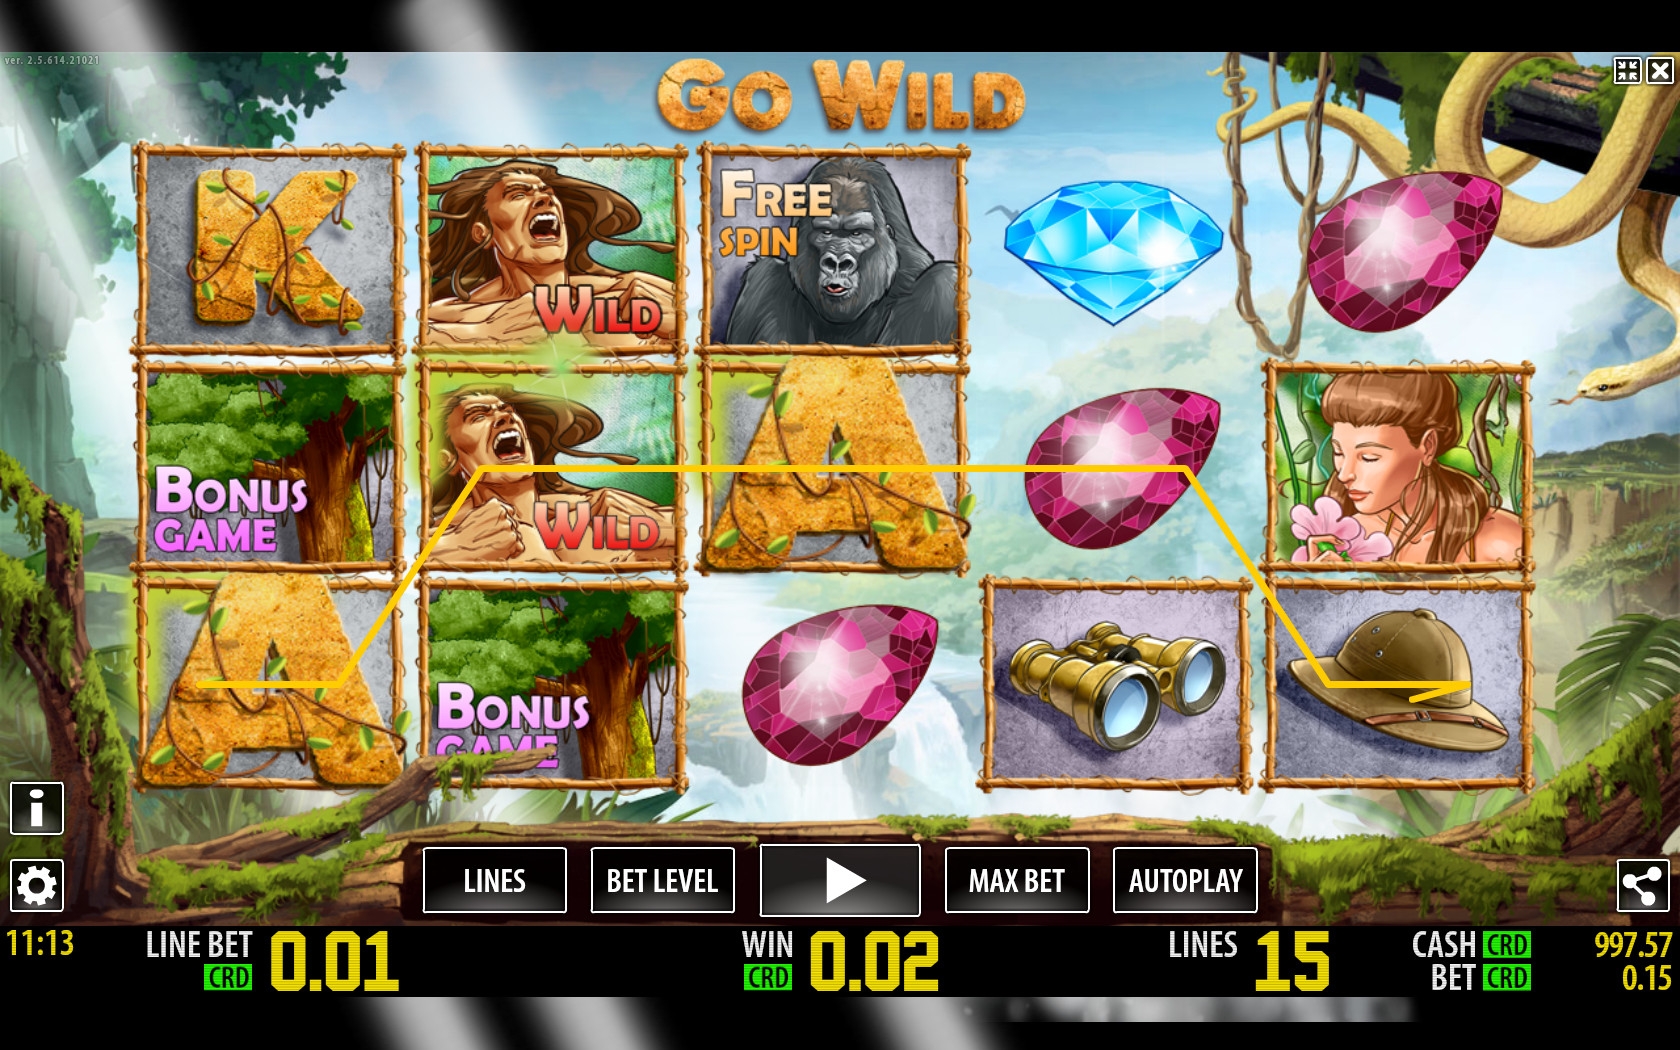 Go Wild (Go Wild) from category Slots